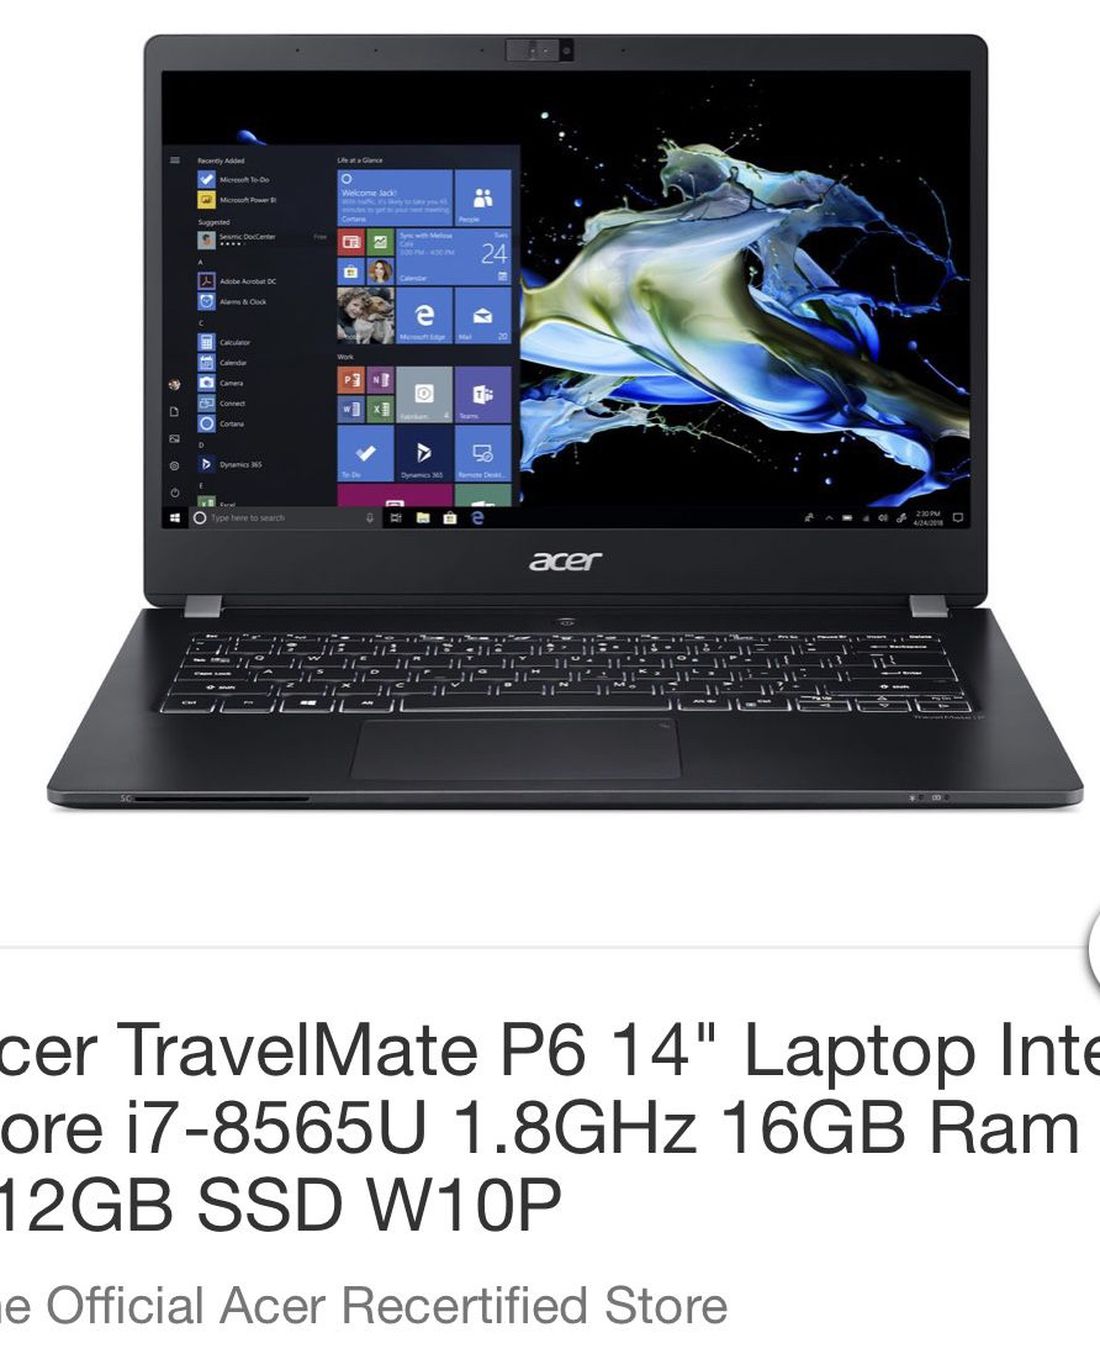 Brand New) Acer Travelmate P6 “14” Inch